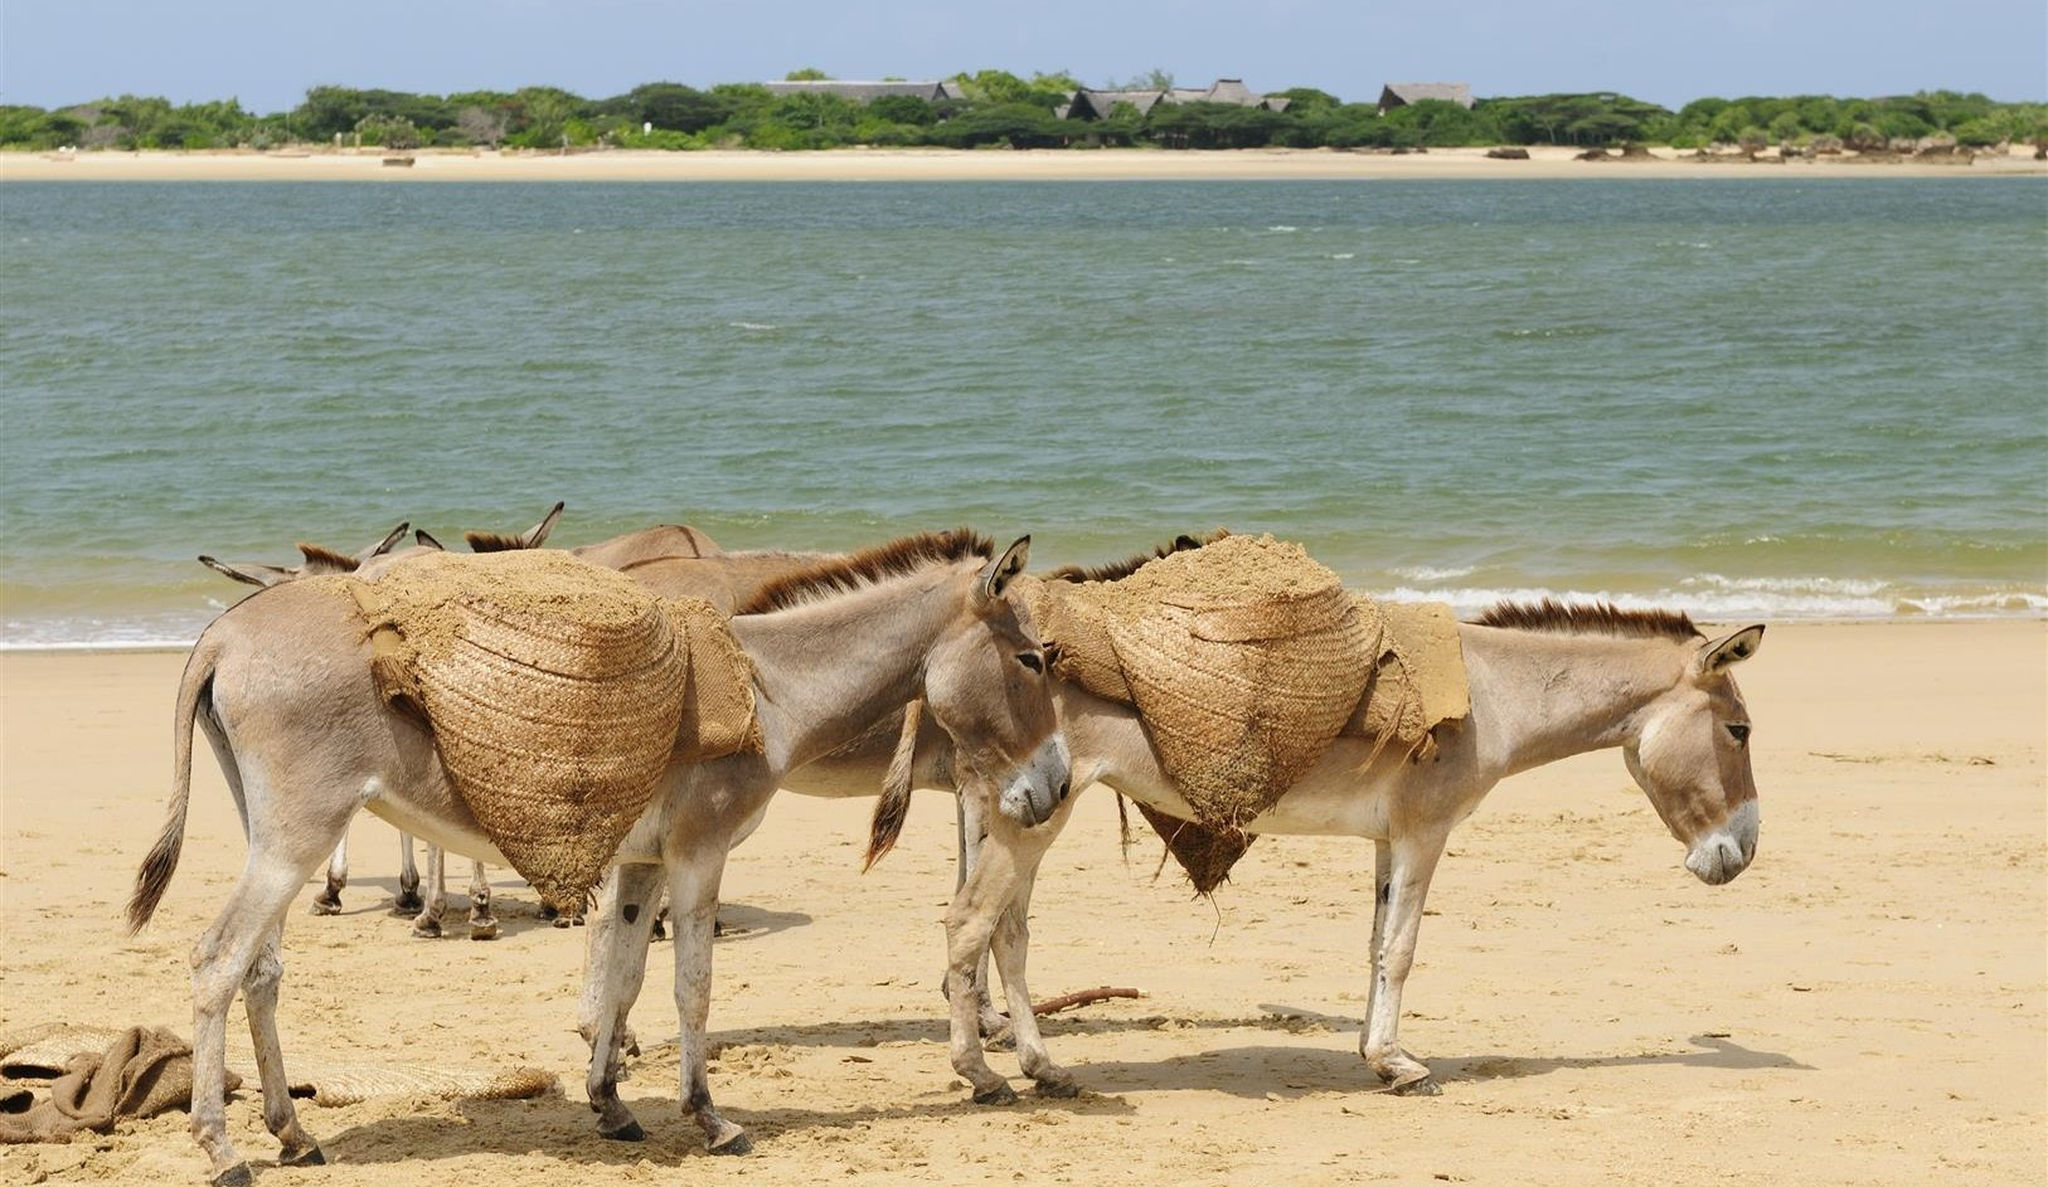 Donkeys walking on the beach at Lamu Island in Kenya